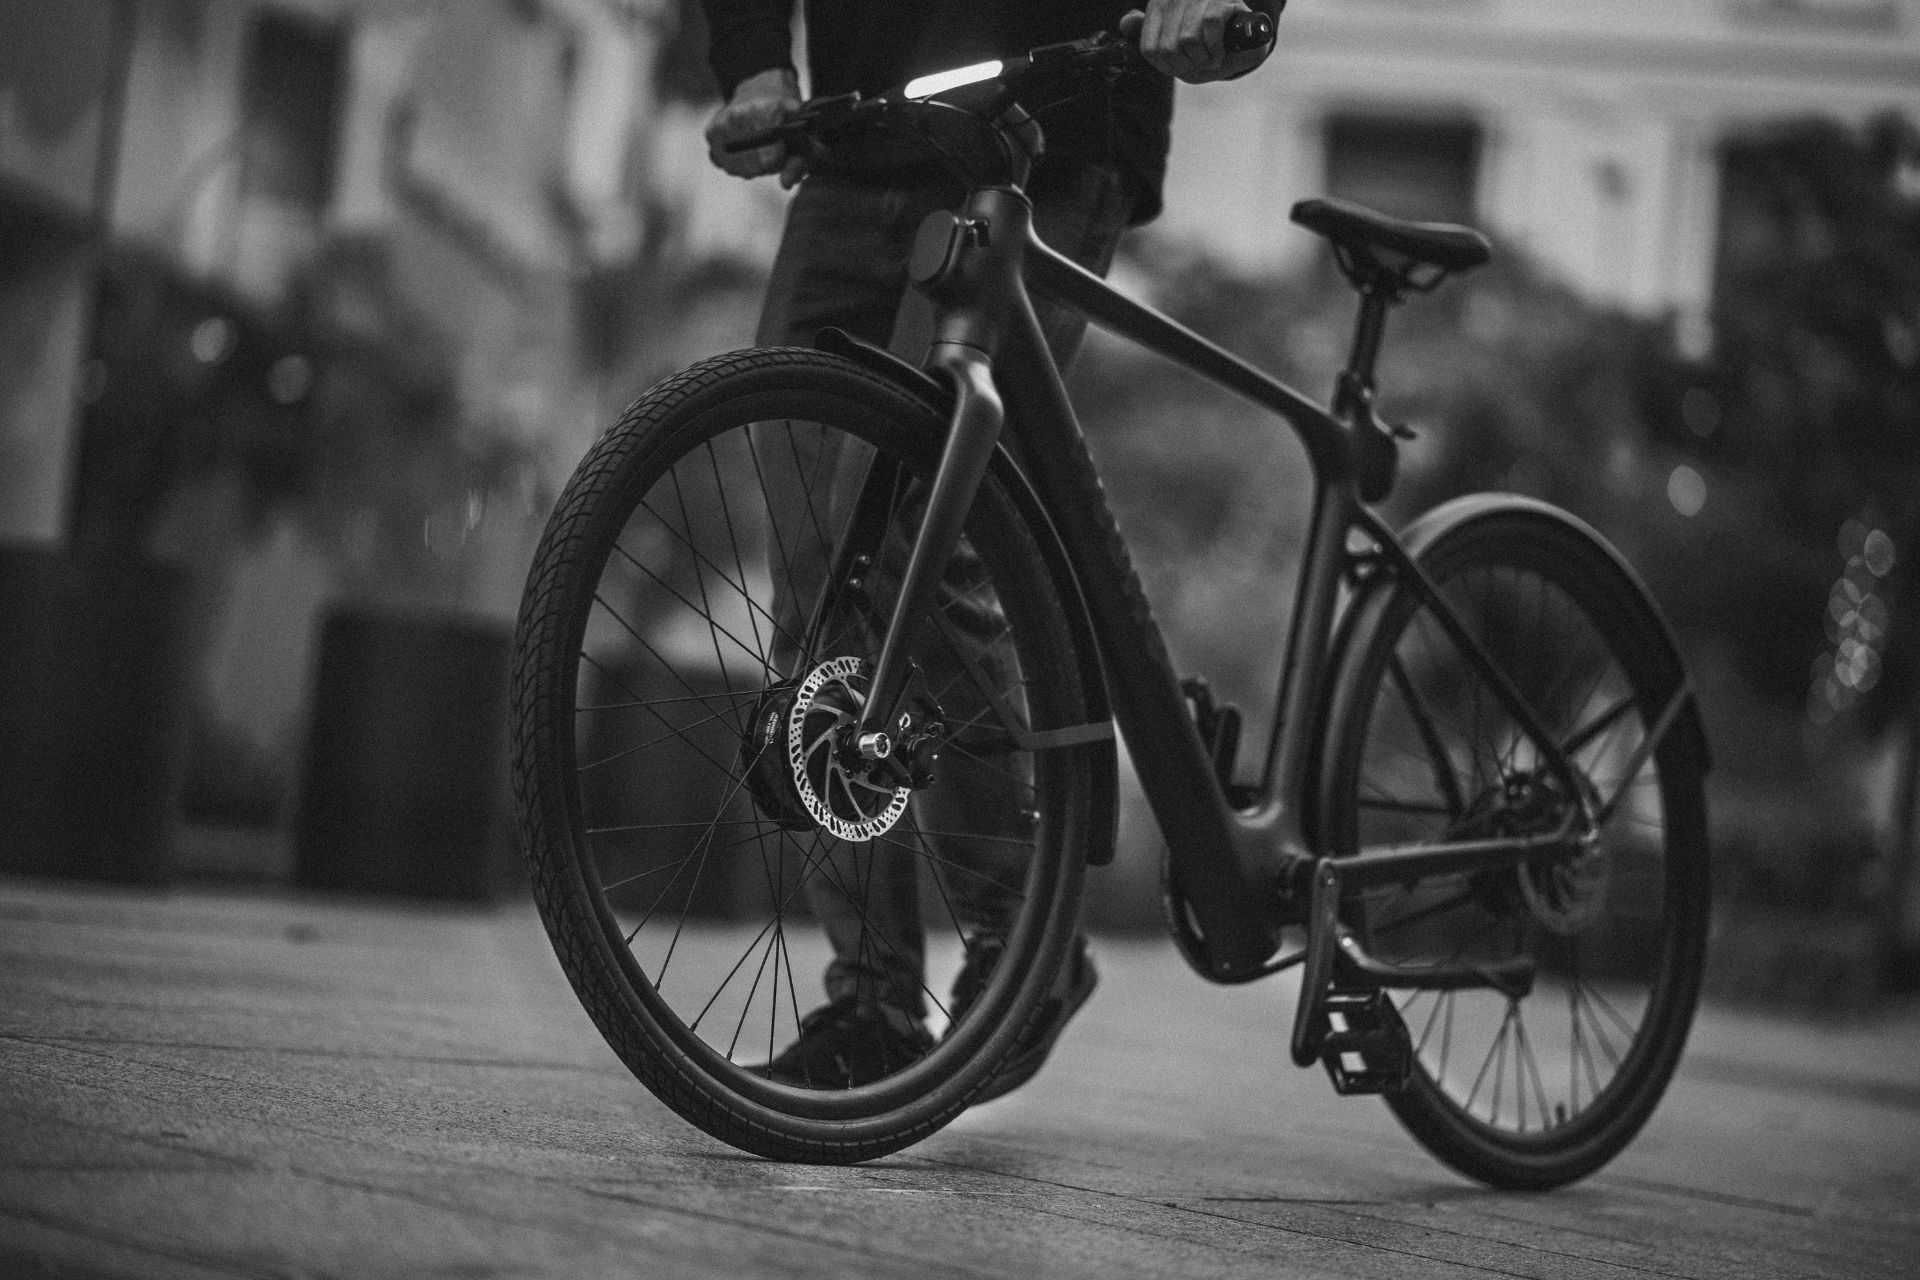 Modmo Saigon+ Electric Bicycle - RRP £2800 - Size S (Rider: 140-155cm) - Image 10 of 19